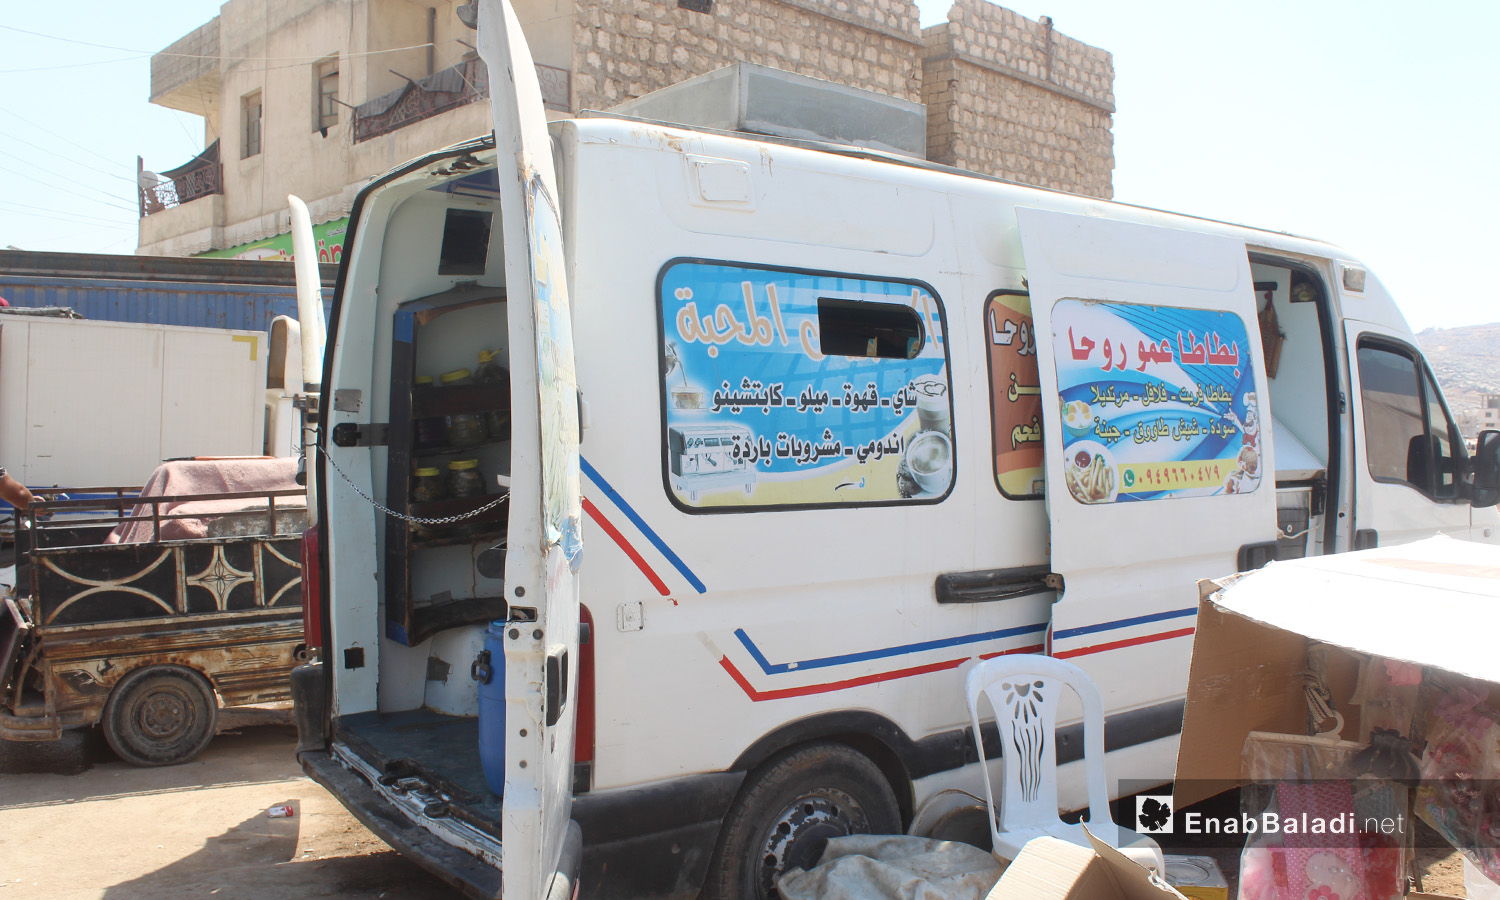 Shaher al-Asaad converted his vehicle into a shop selling sandwiches in Sarmada – September 2020 (Enab Baladi / Iyad Abdel Jawad)